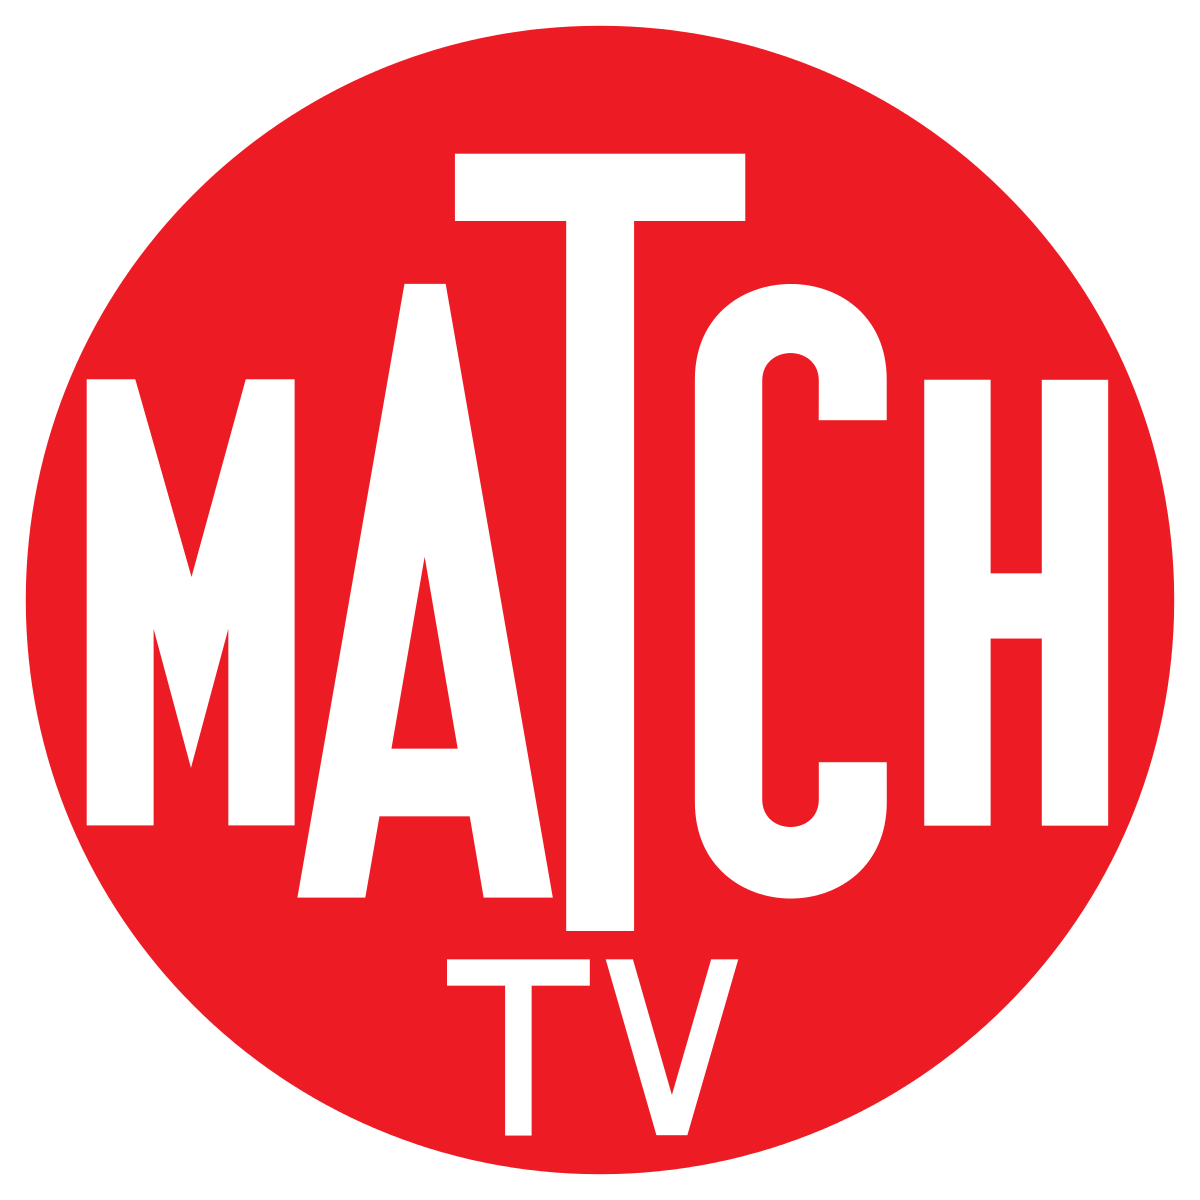 Match TV